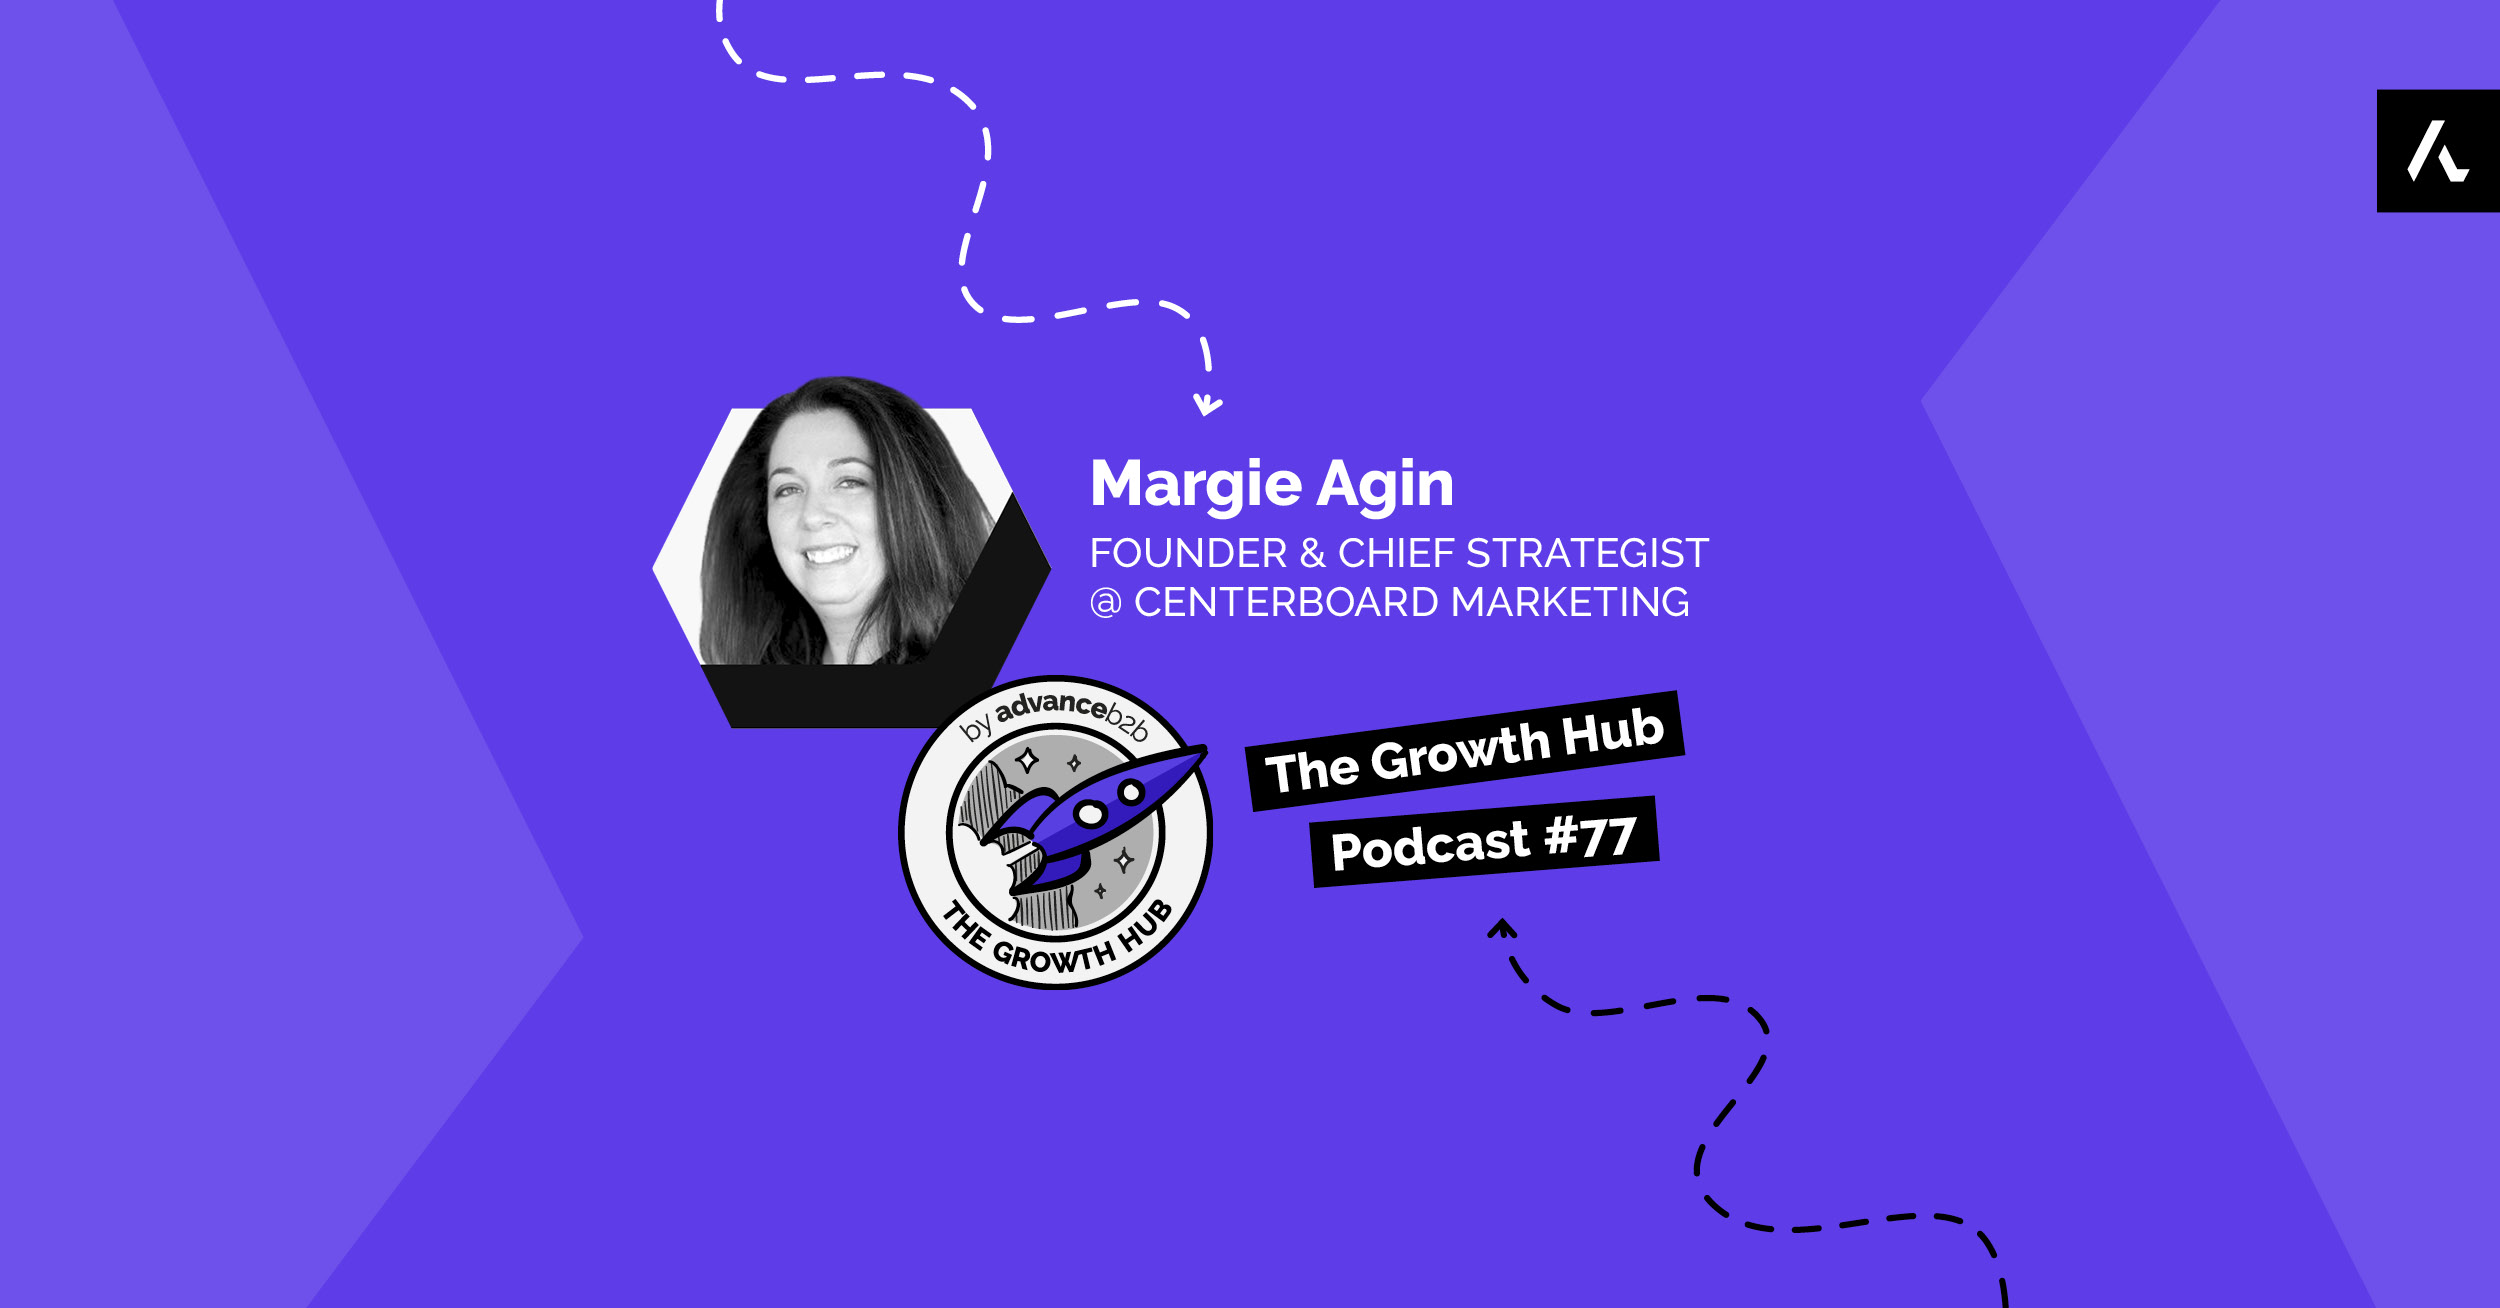 Margie Agin, Founder & Chief Strategist at Centerboard Marketing